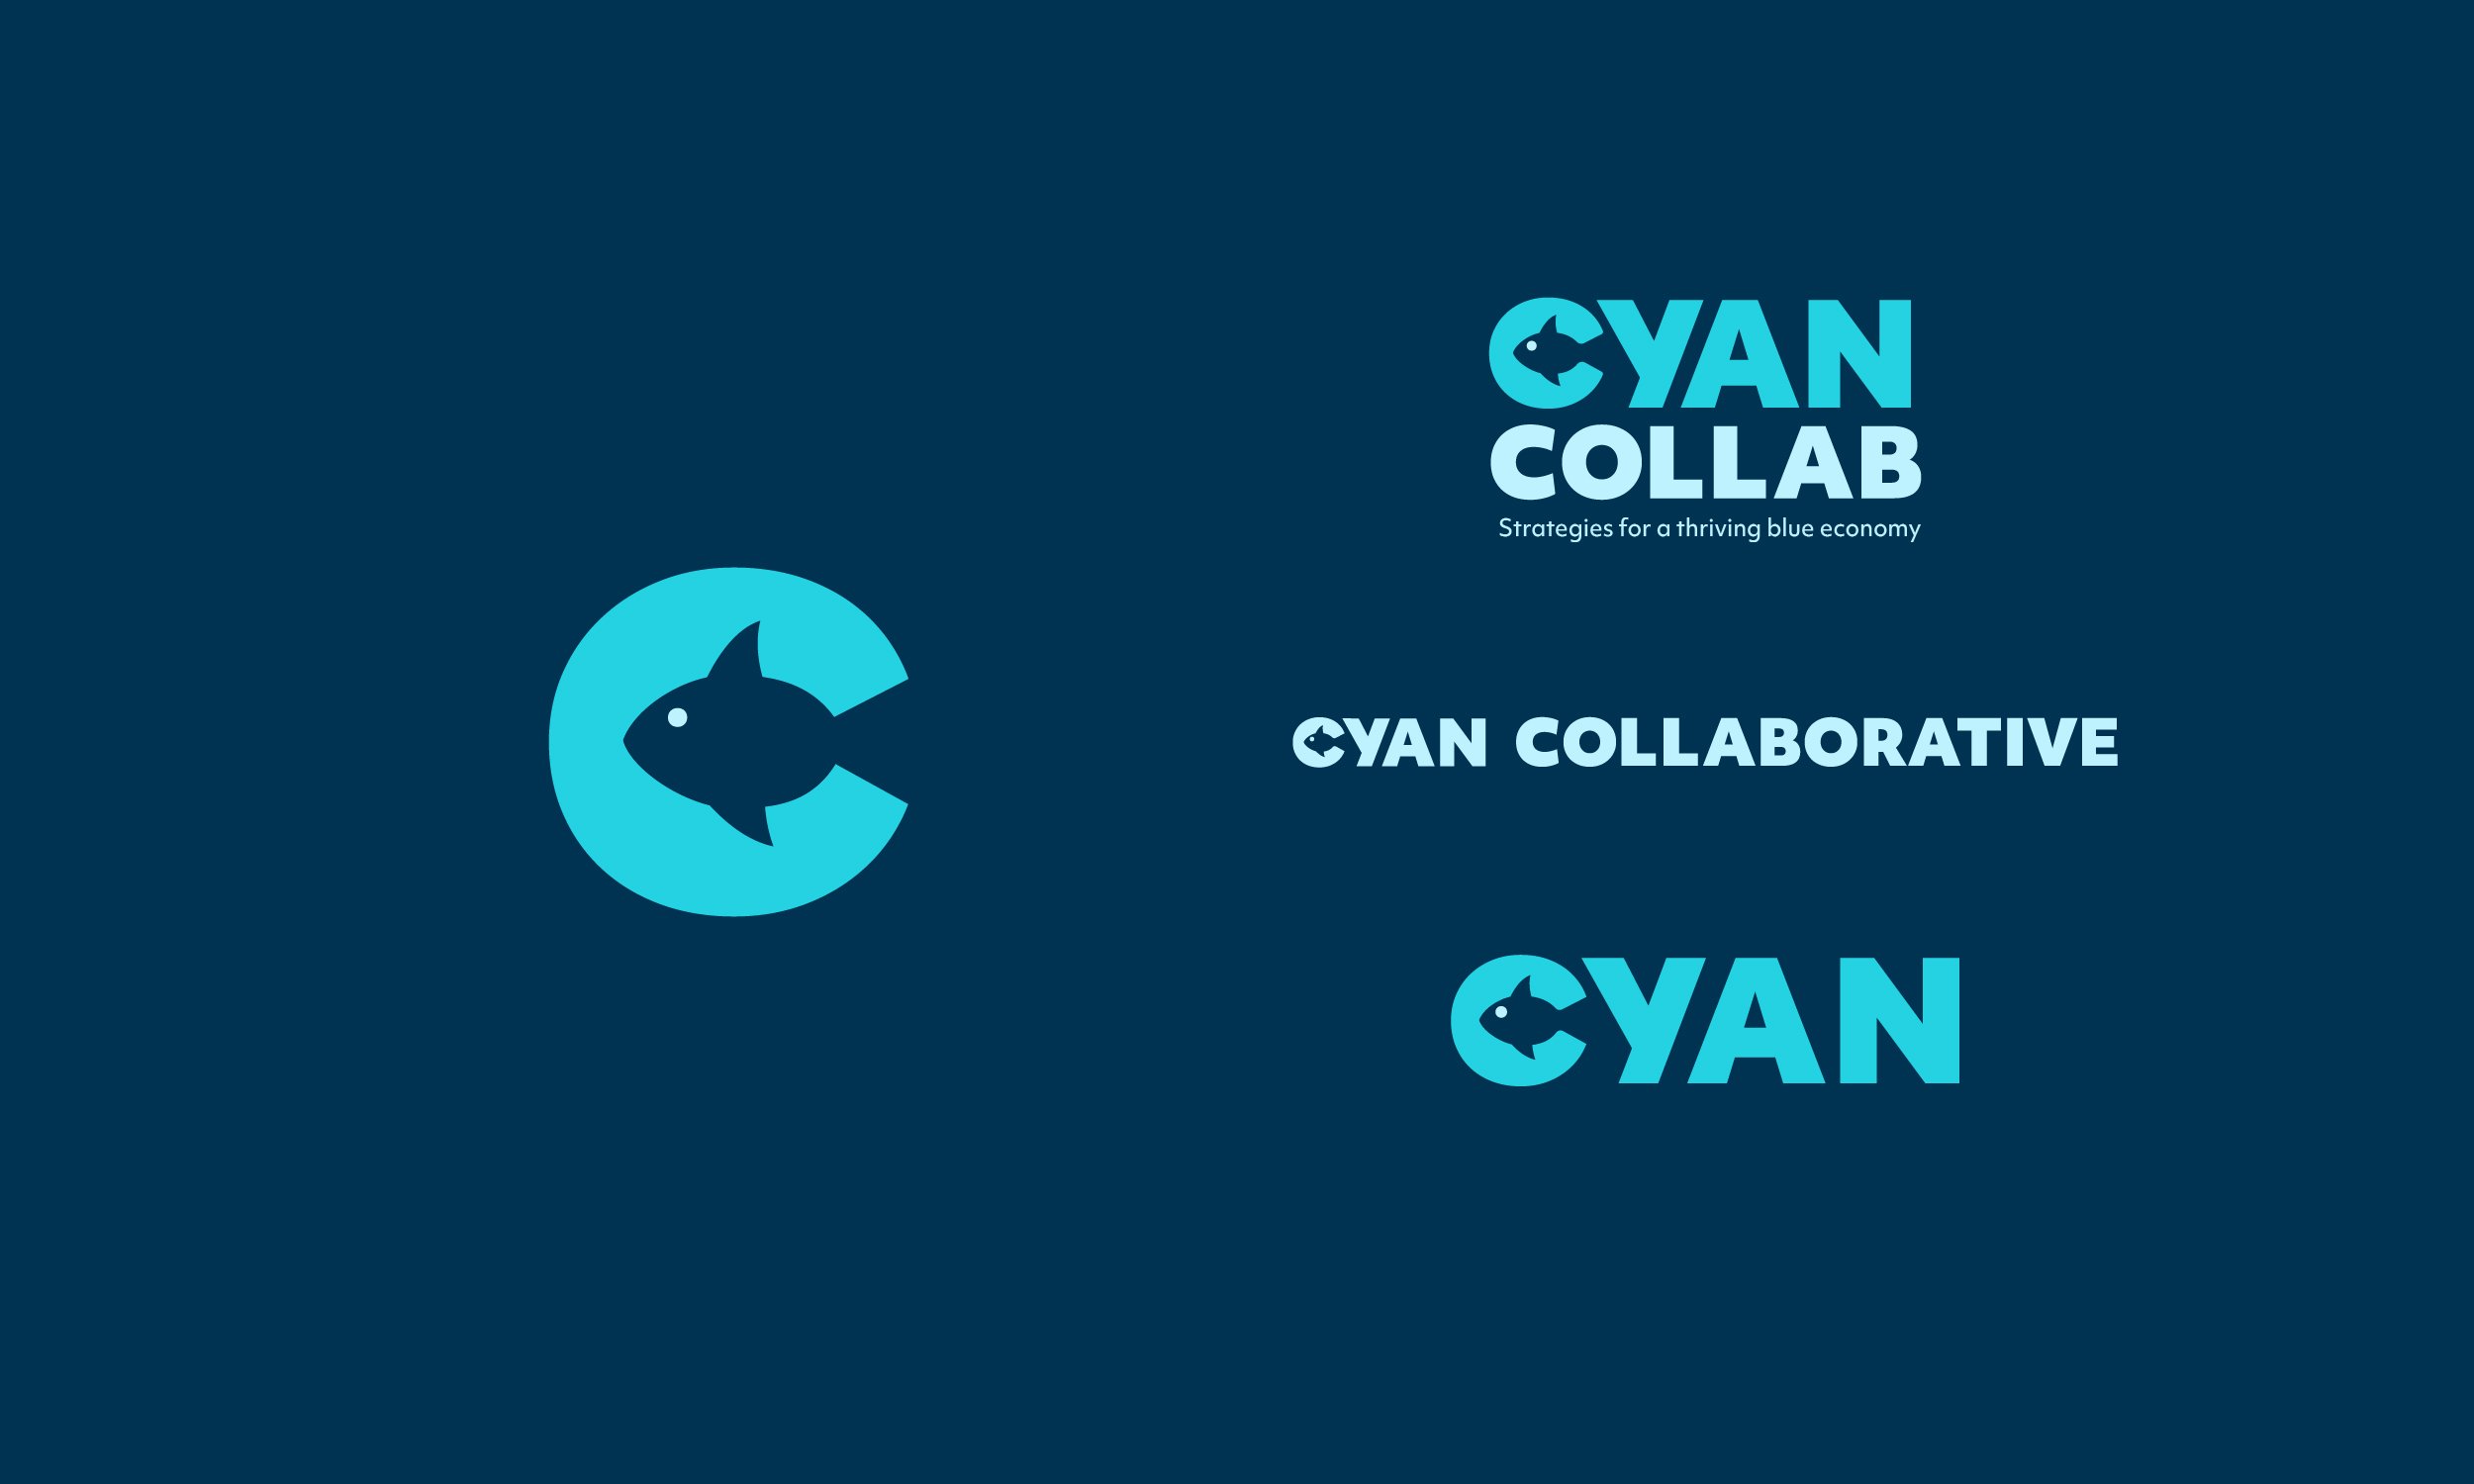 CyanCollab_concept-1.jpg